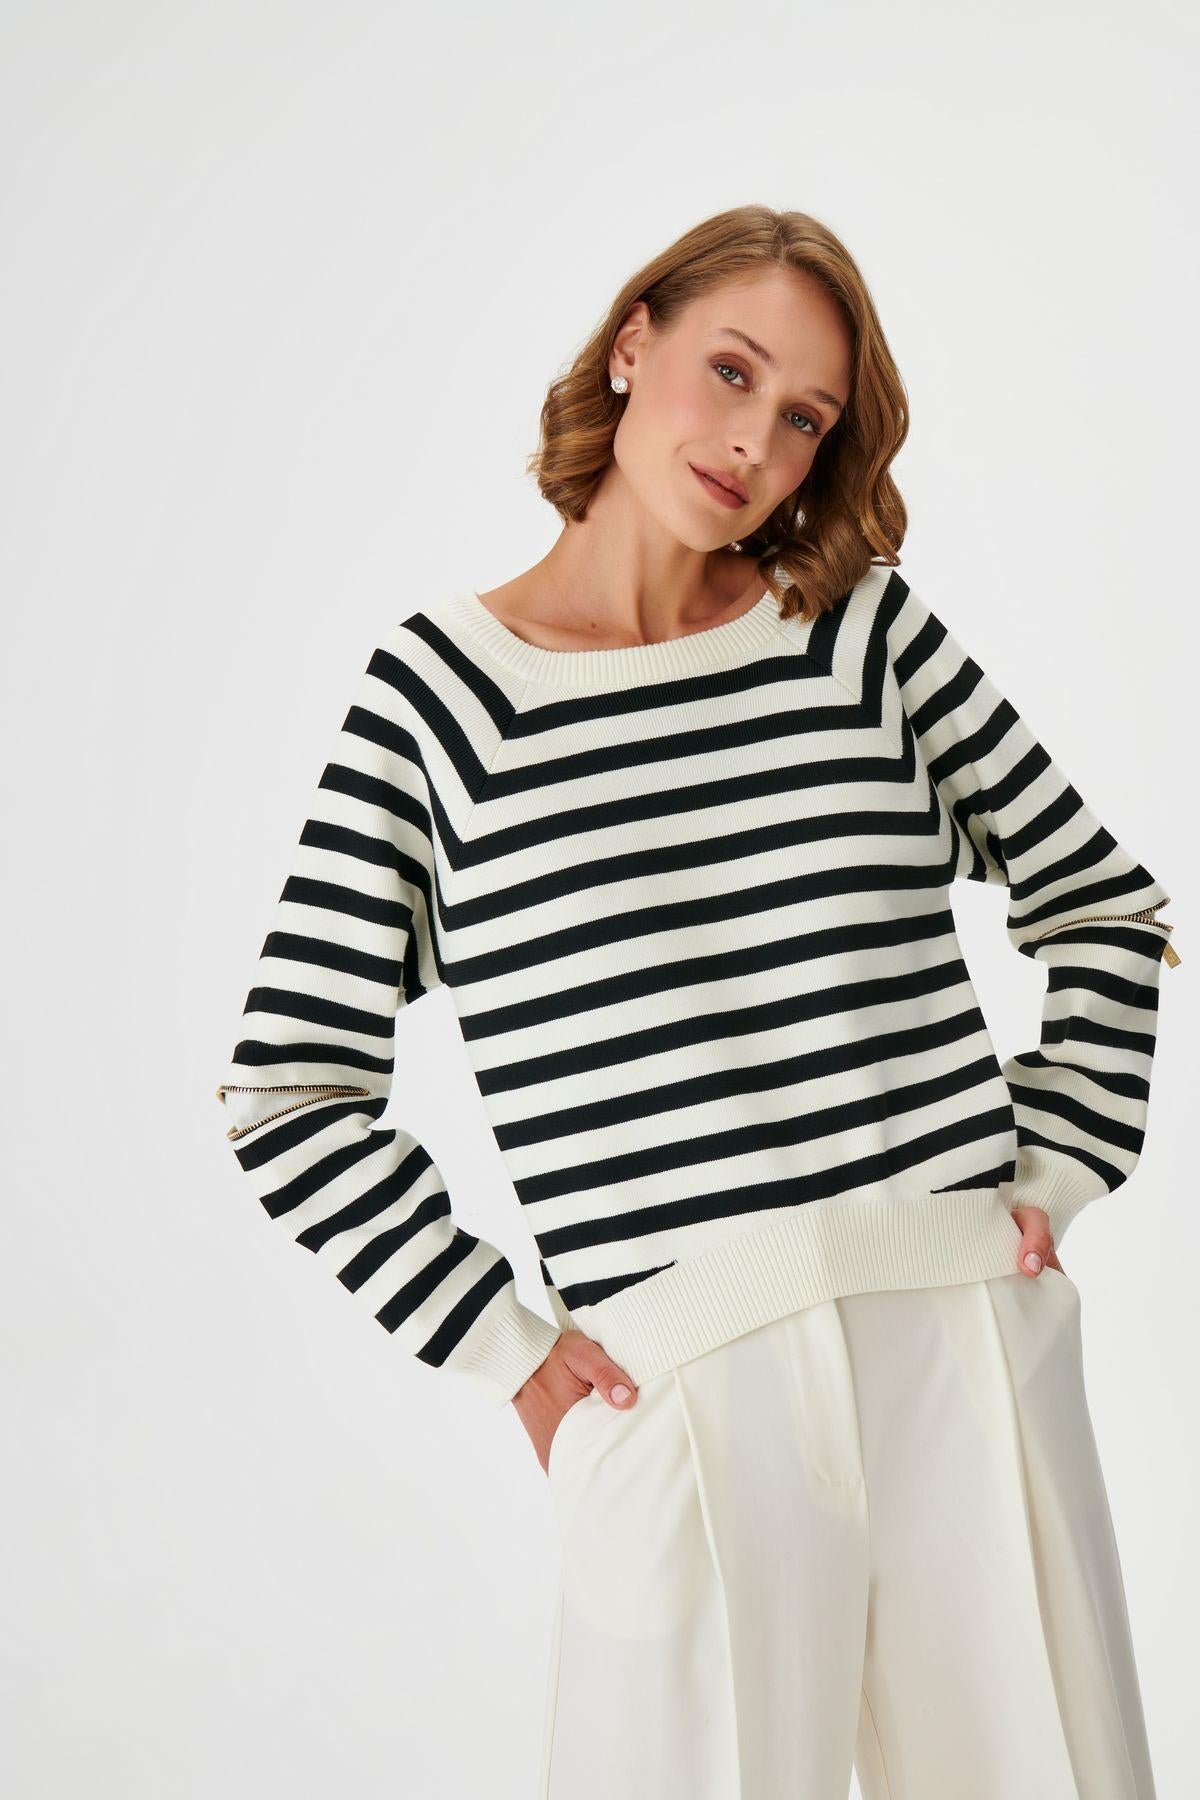 Black White Striped Knitwear Sweater with Zipper Detail